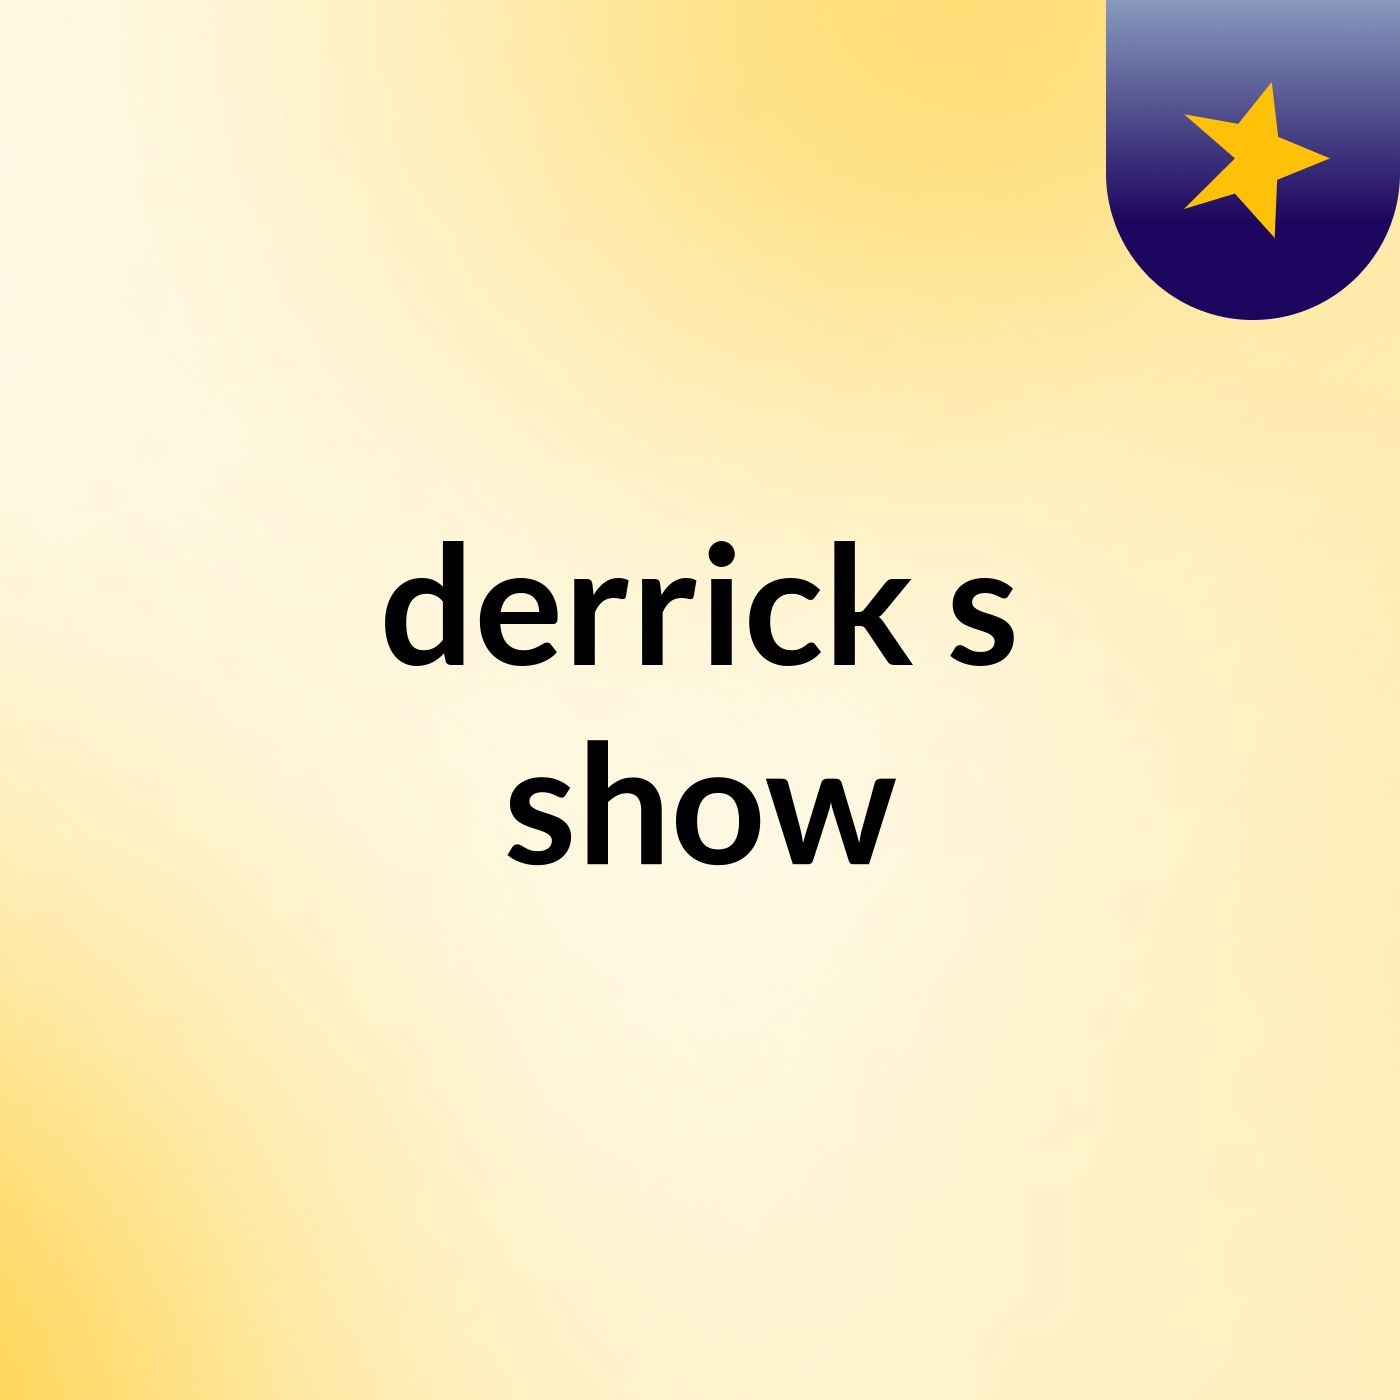 derrick's show